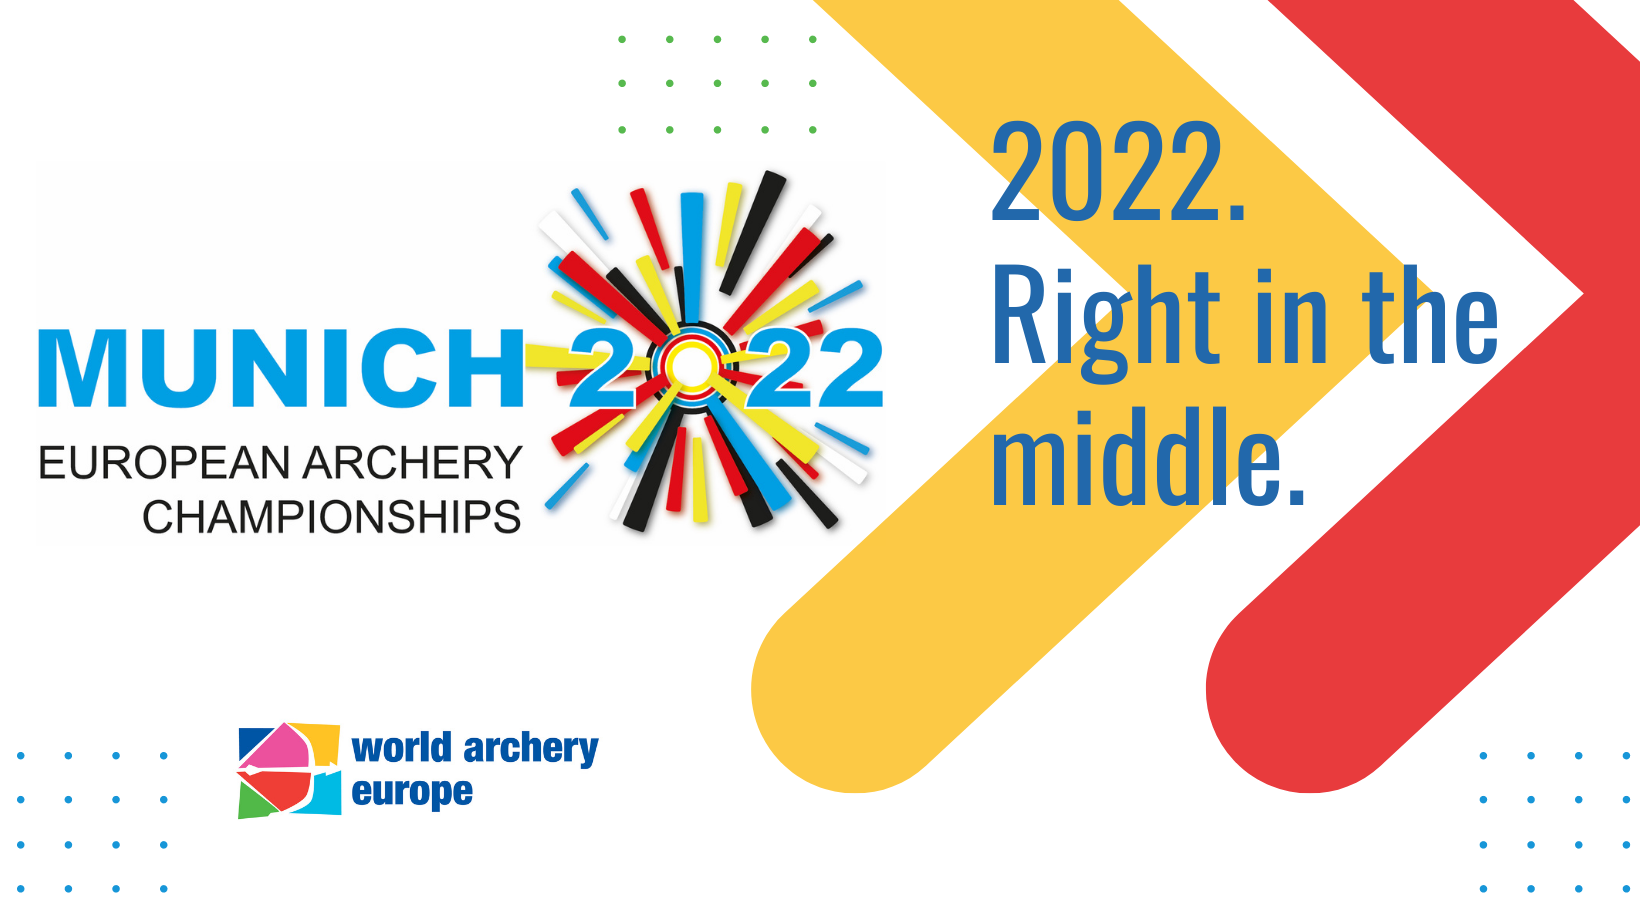 Kraków-Małopolska 2023 spots up for grabs at European Archery Championships